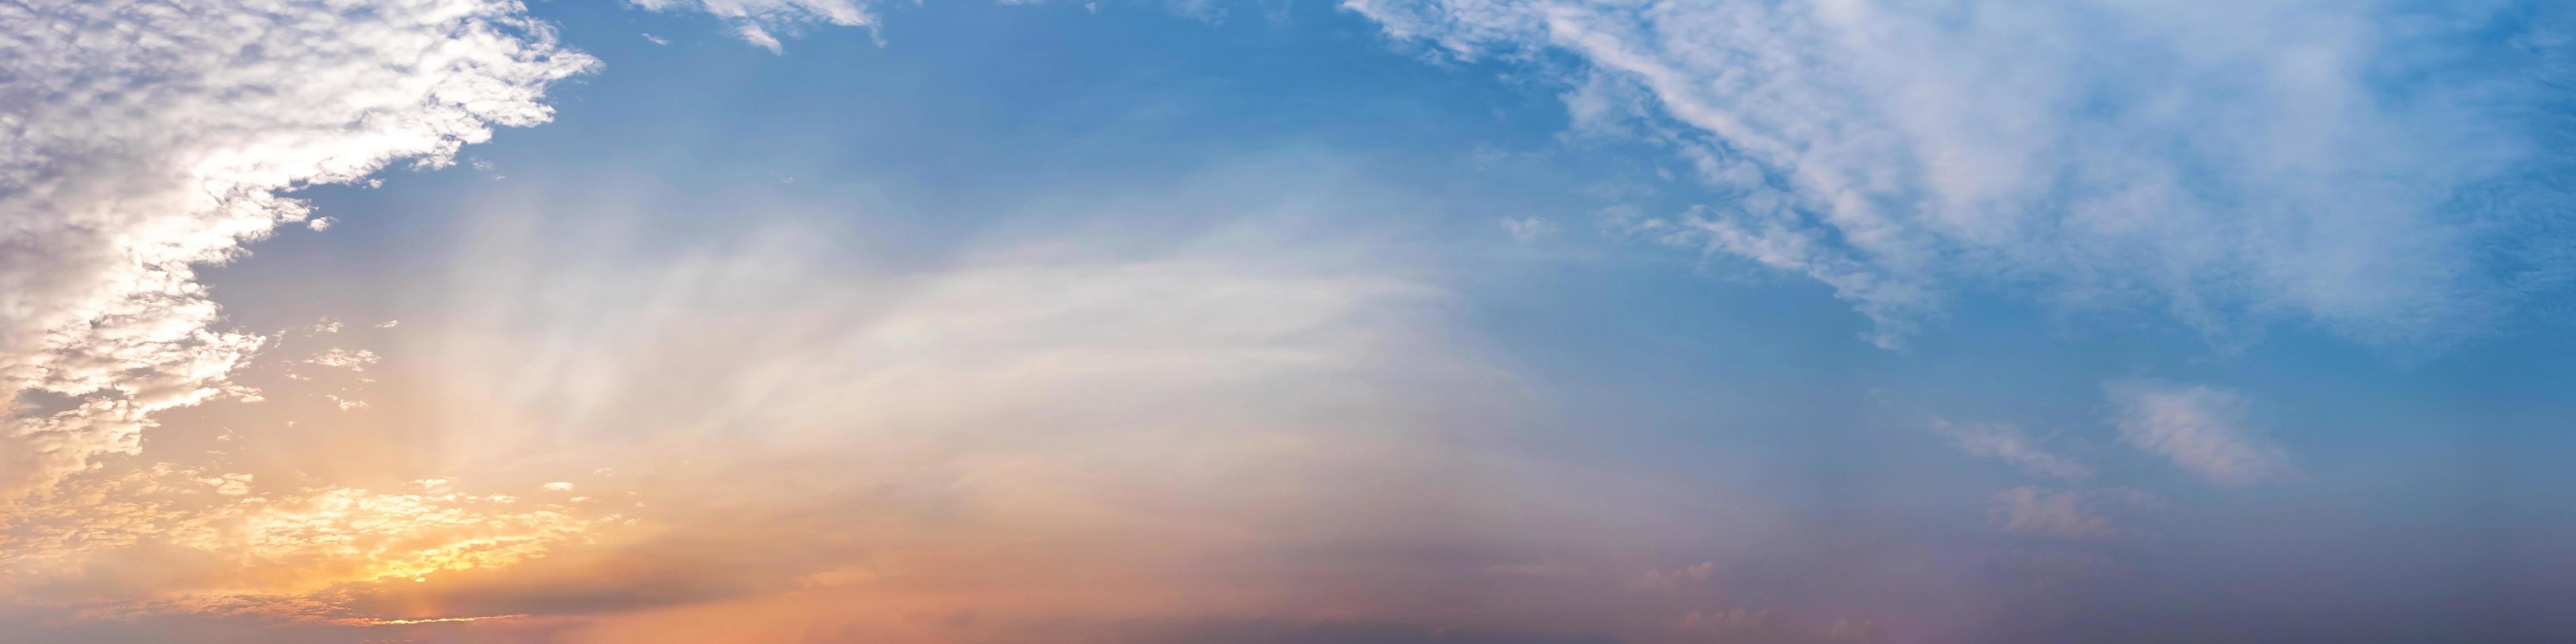 dramatische panoramahemel met wolk op zonsopgang en zonsondergangtijd foto